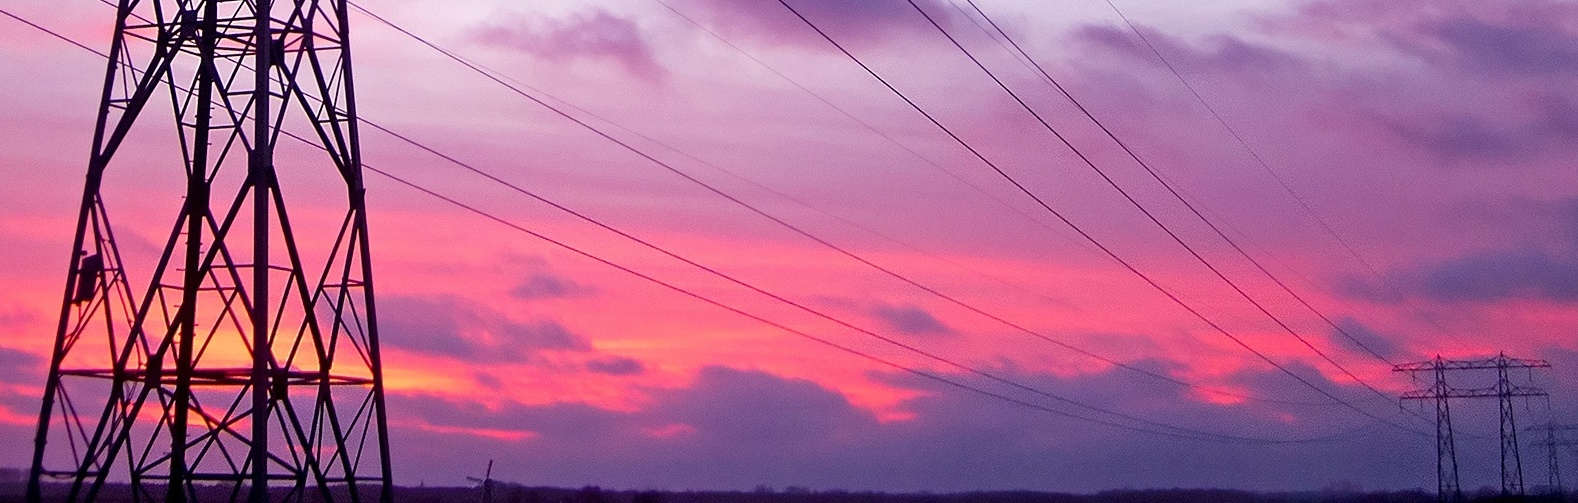 powerlines-sunset-114356-edited.jpg